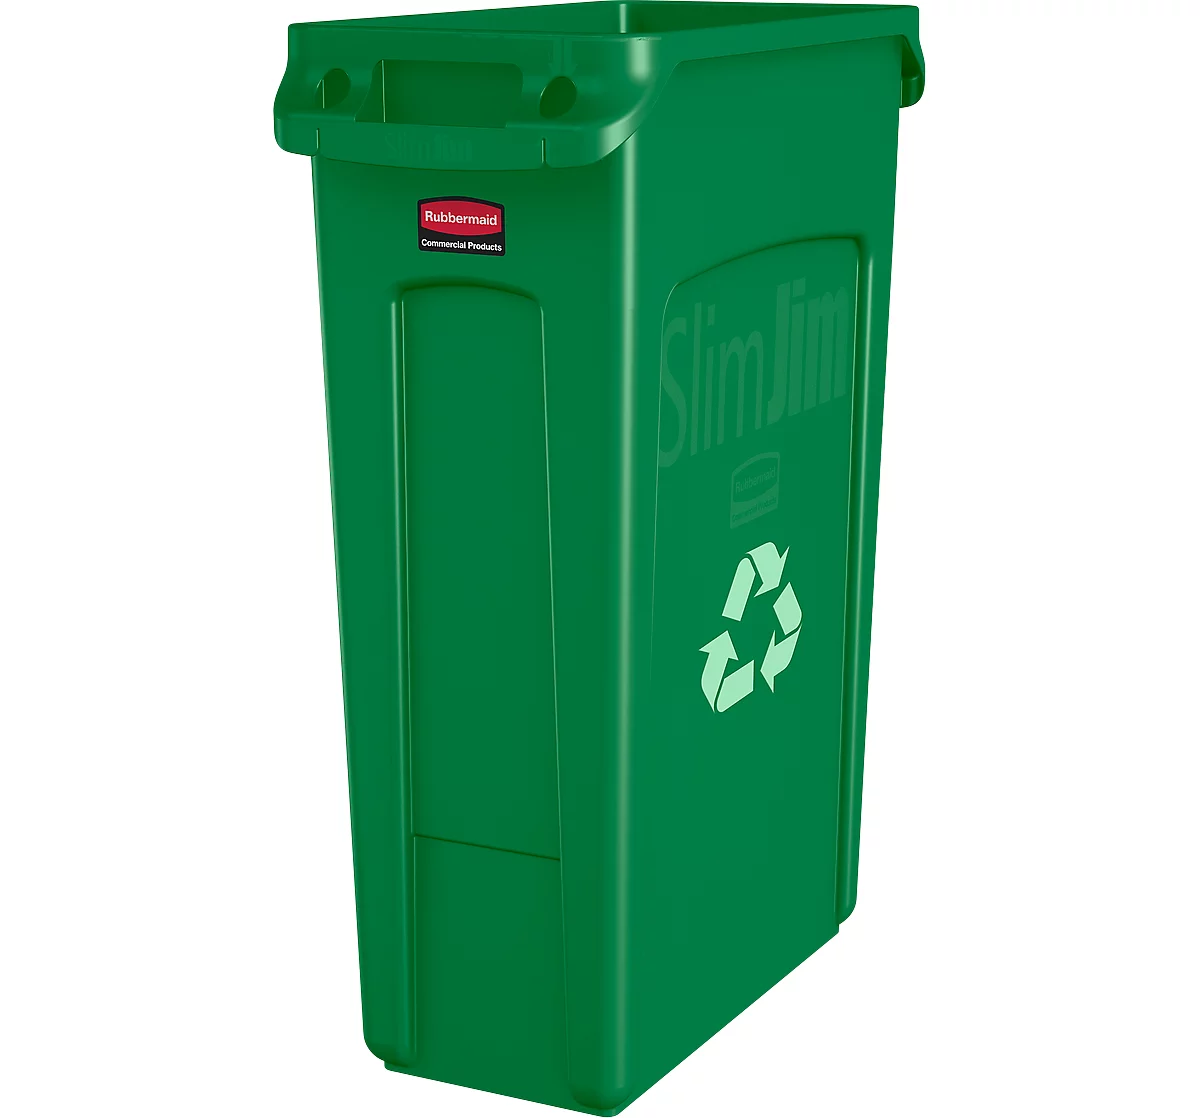 Slim Jim® Abfallbehälter, 87 Liter, grün, m. Recycling-Symbol